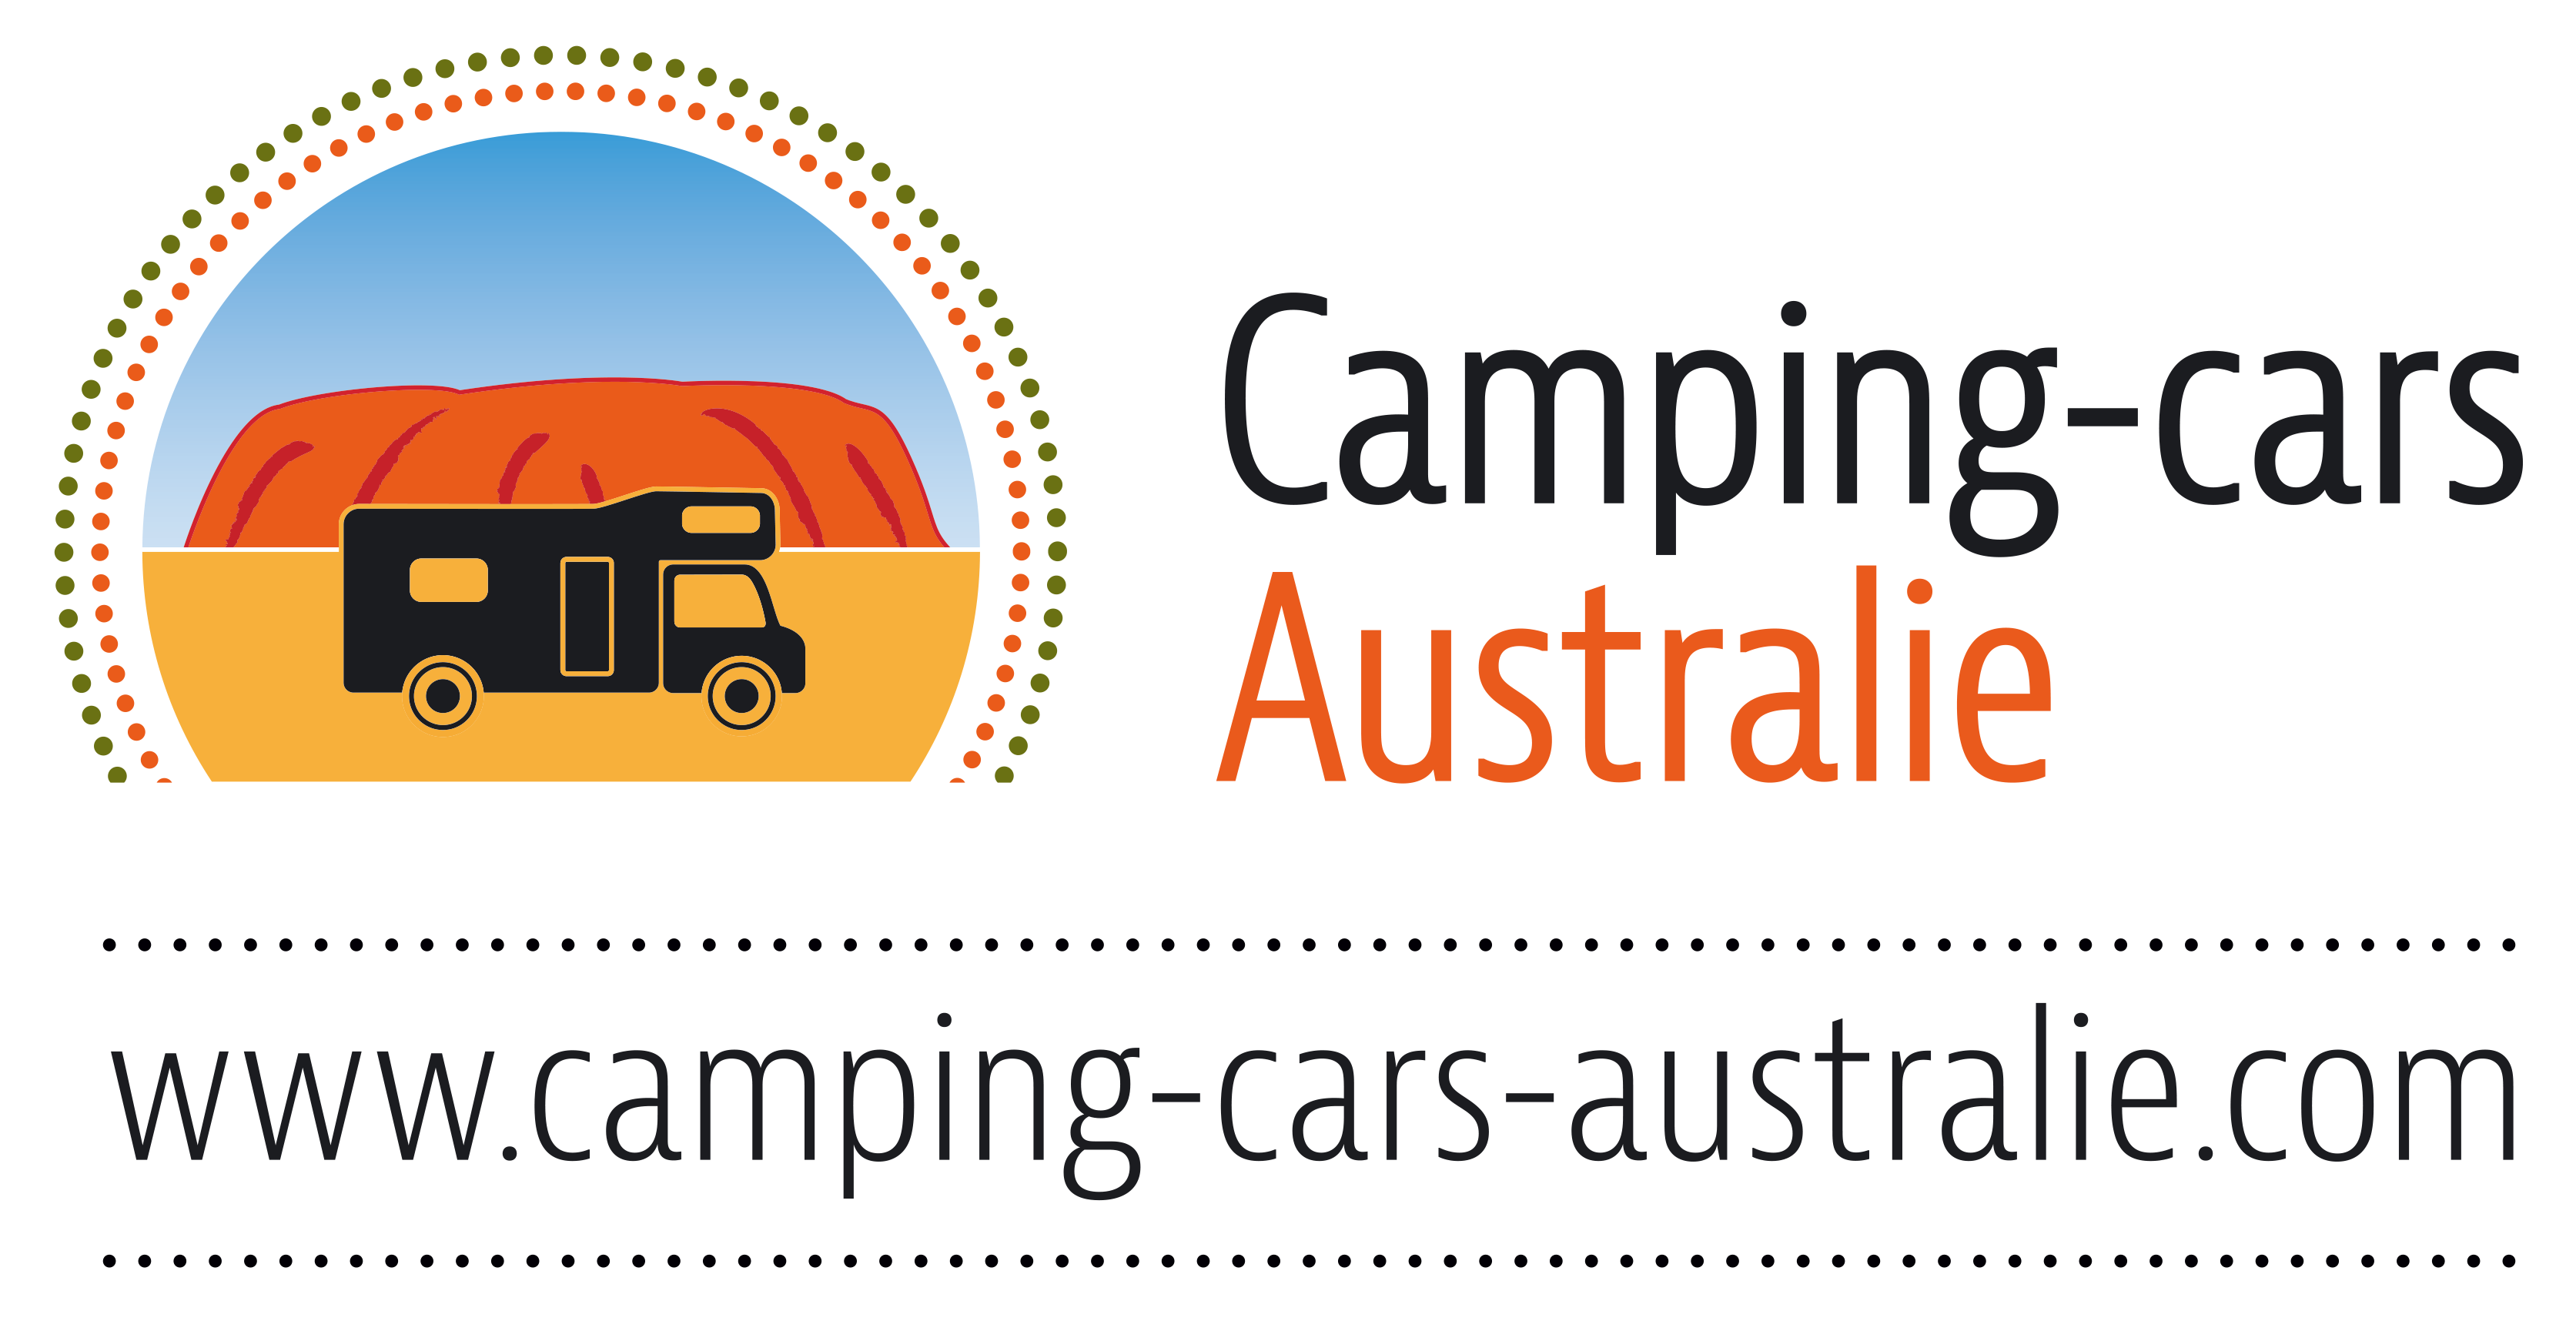  logo  camping  cars  australie adresse site Antipodes Travel